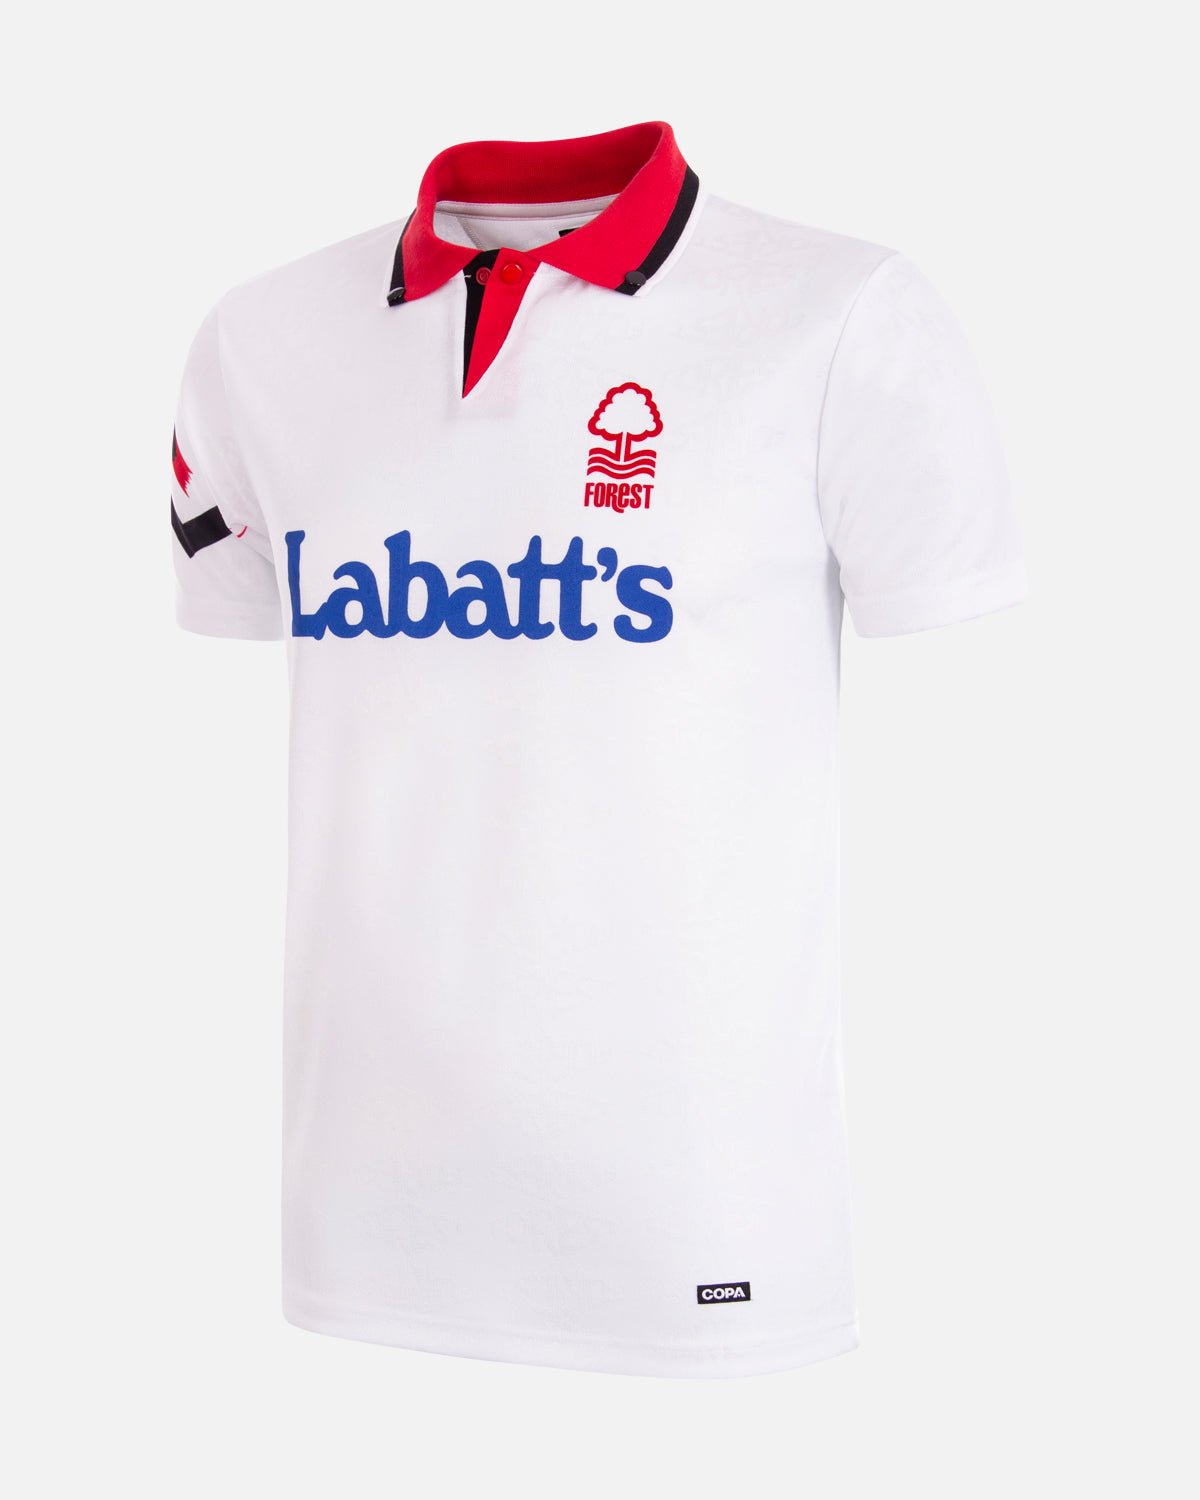 Retro Shirts - Nottingham Forest FC